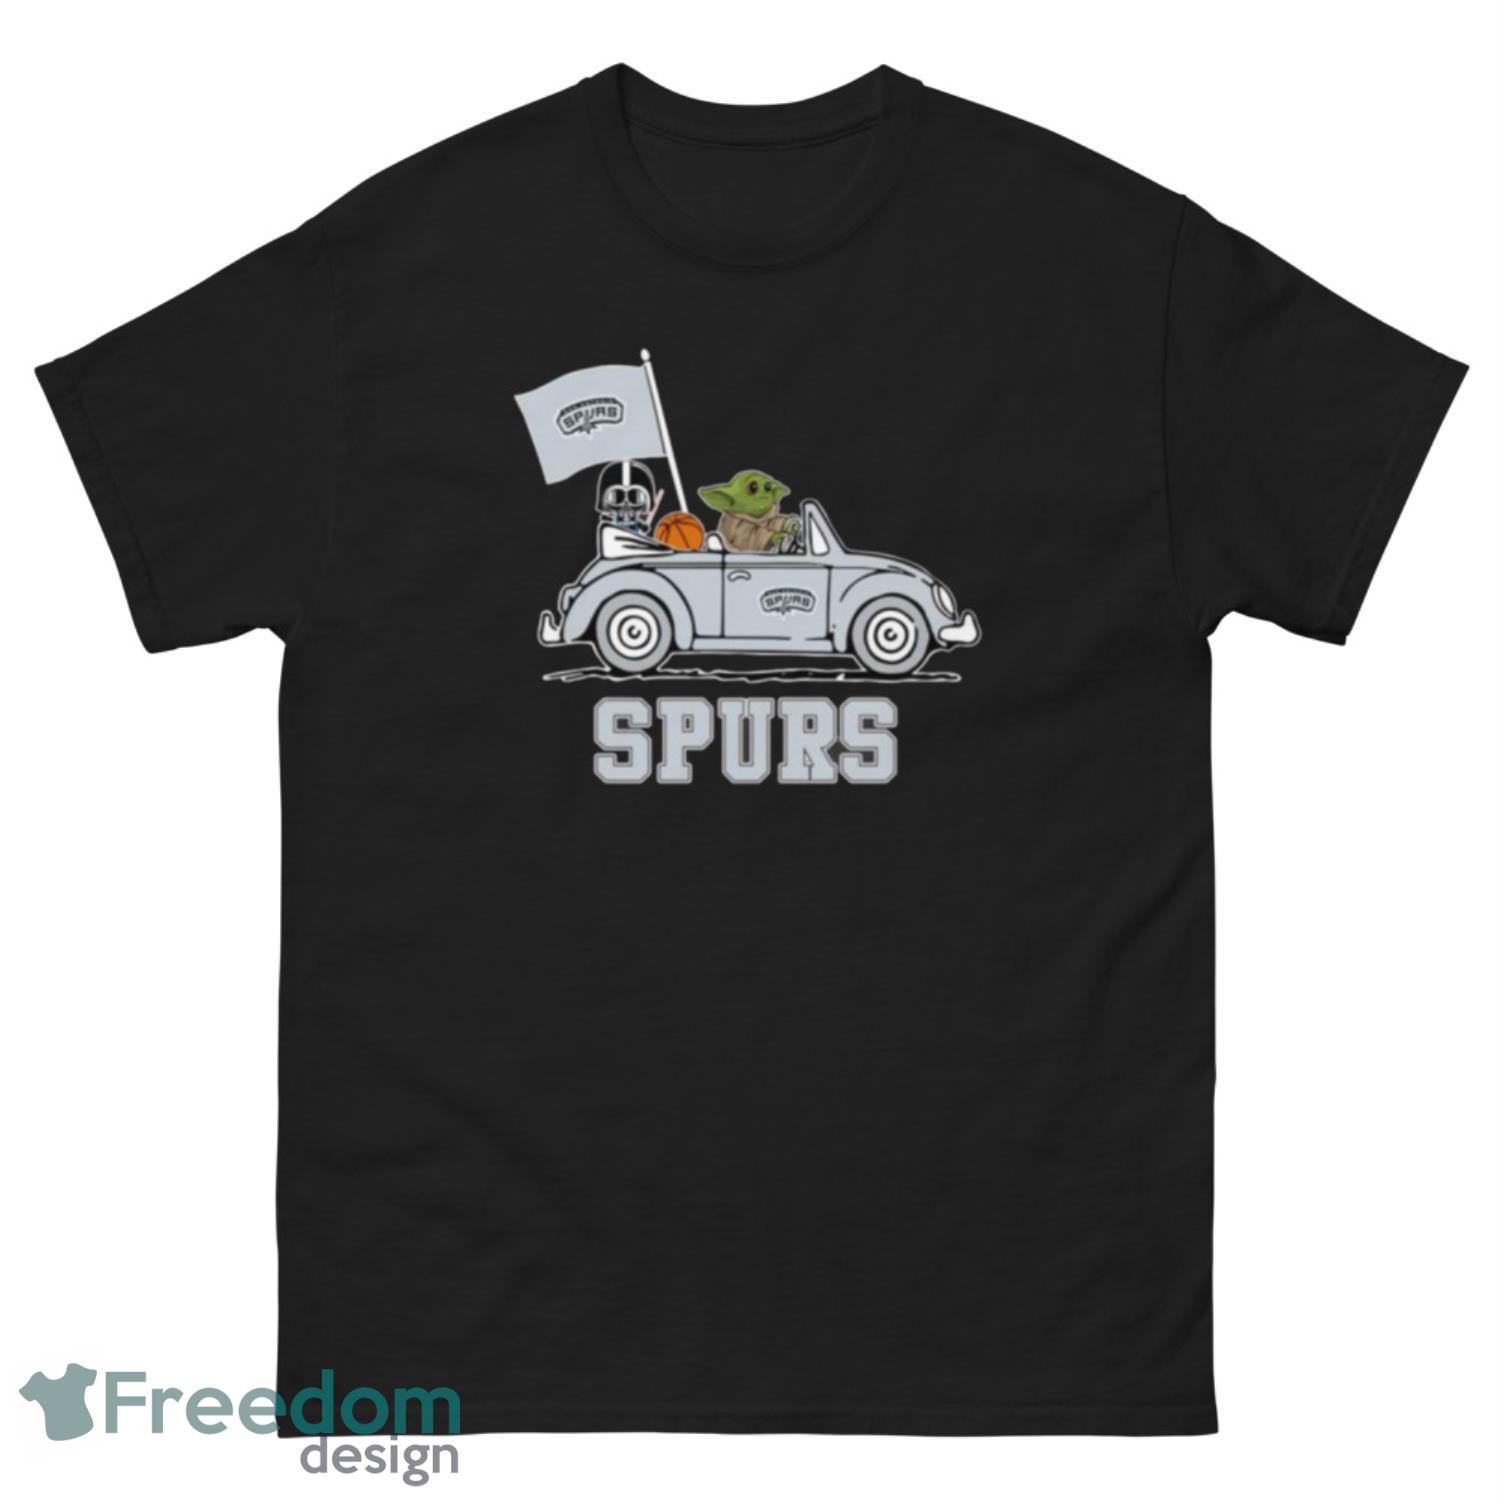 NBA San Antonio Spurs Hawaiian Shirt For Men And Women - Freedomdesign